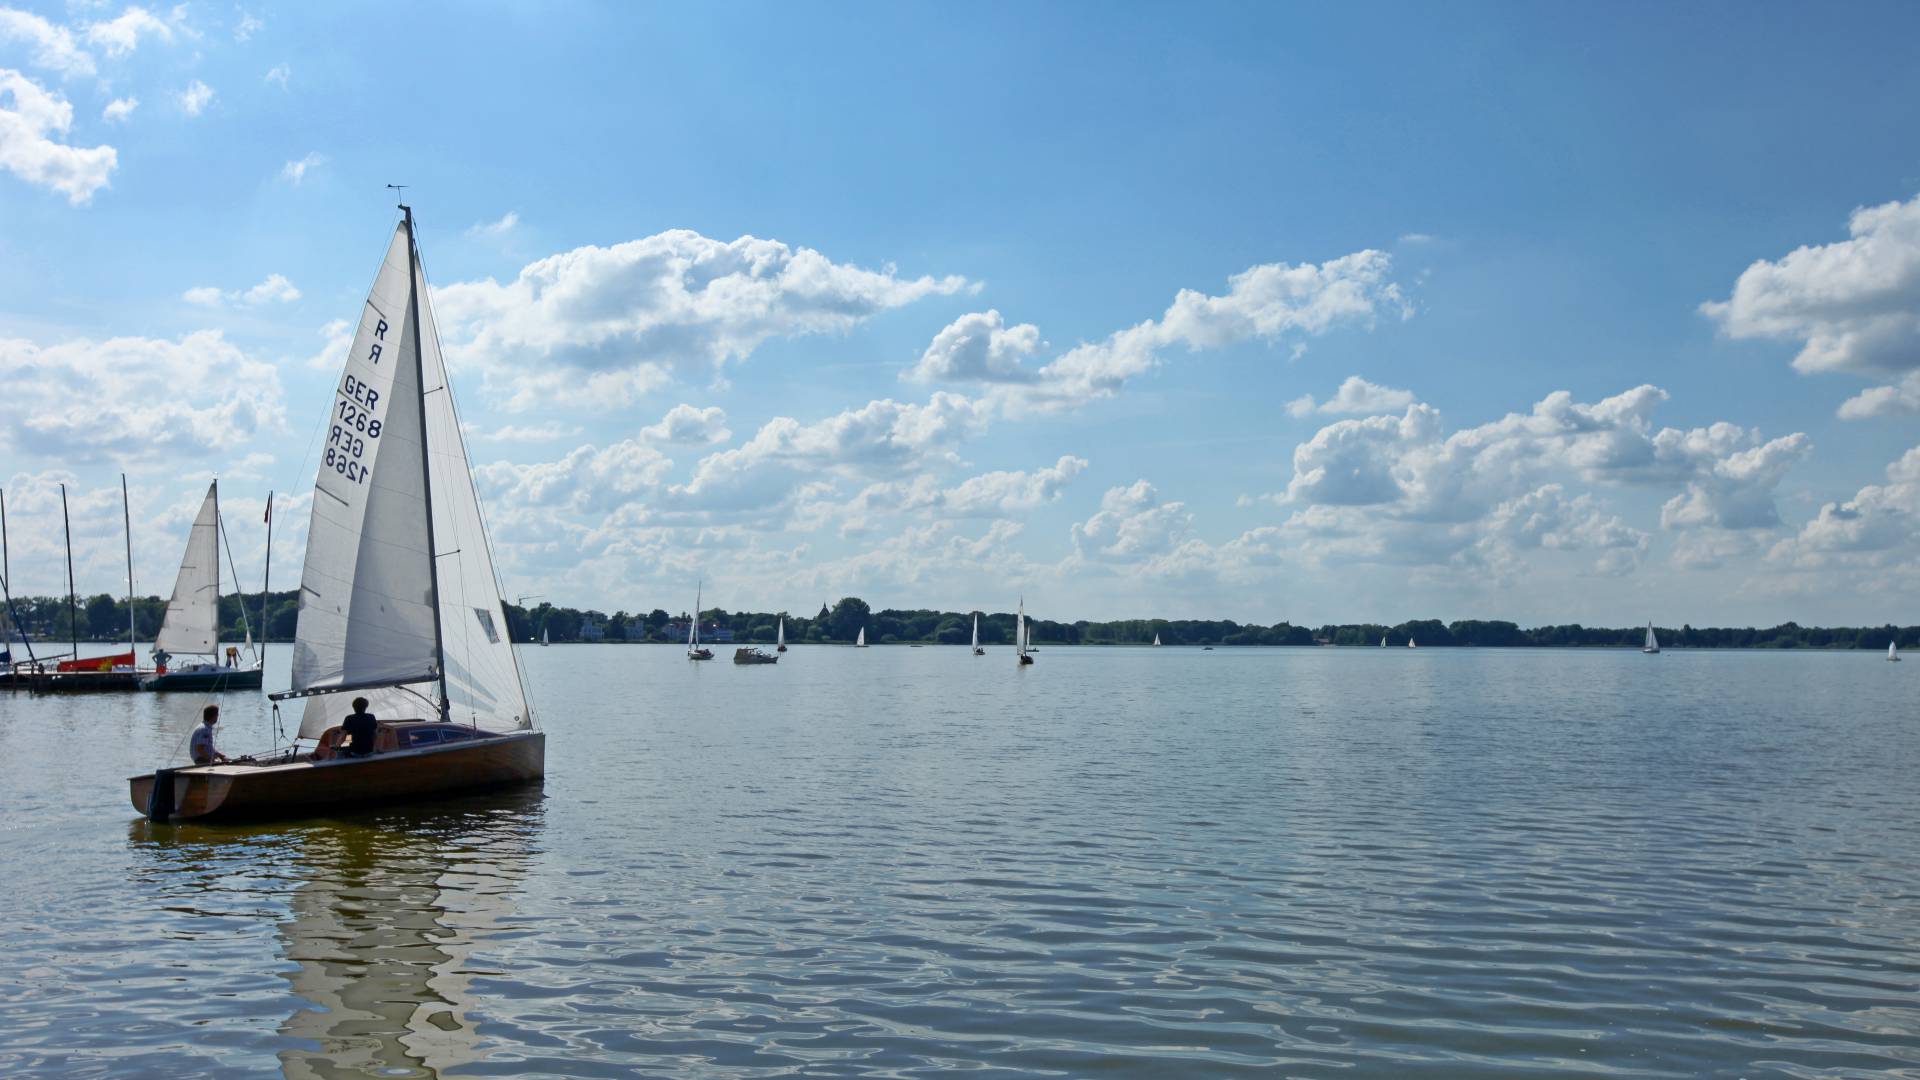 Sailboat on lake